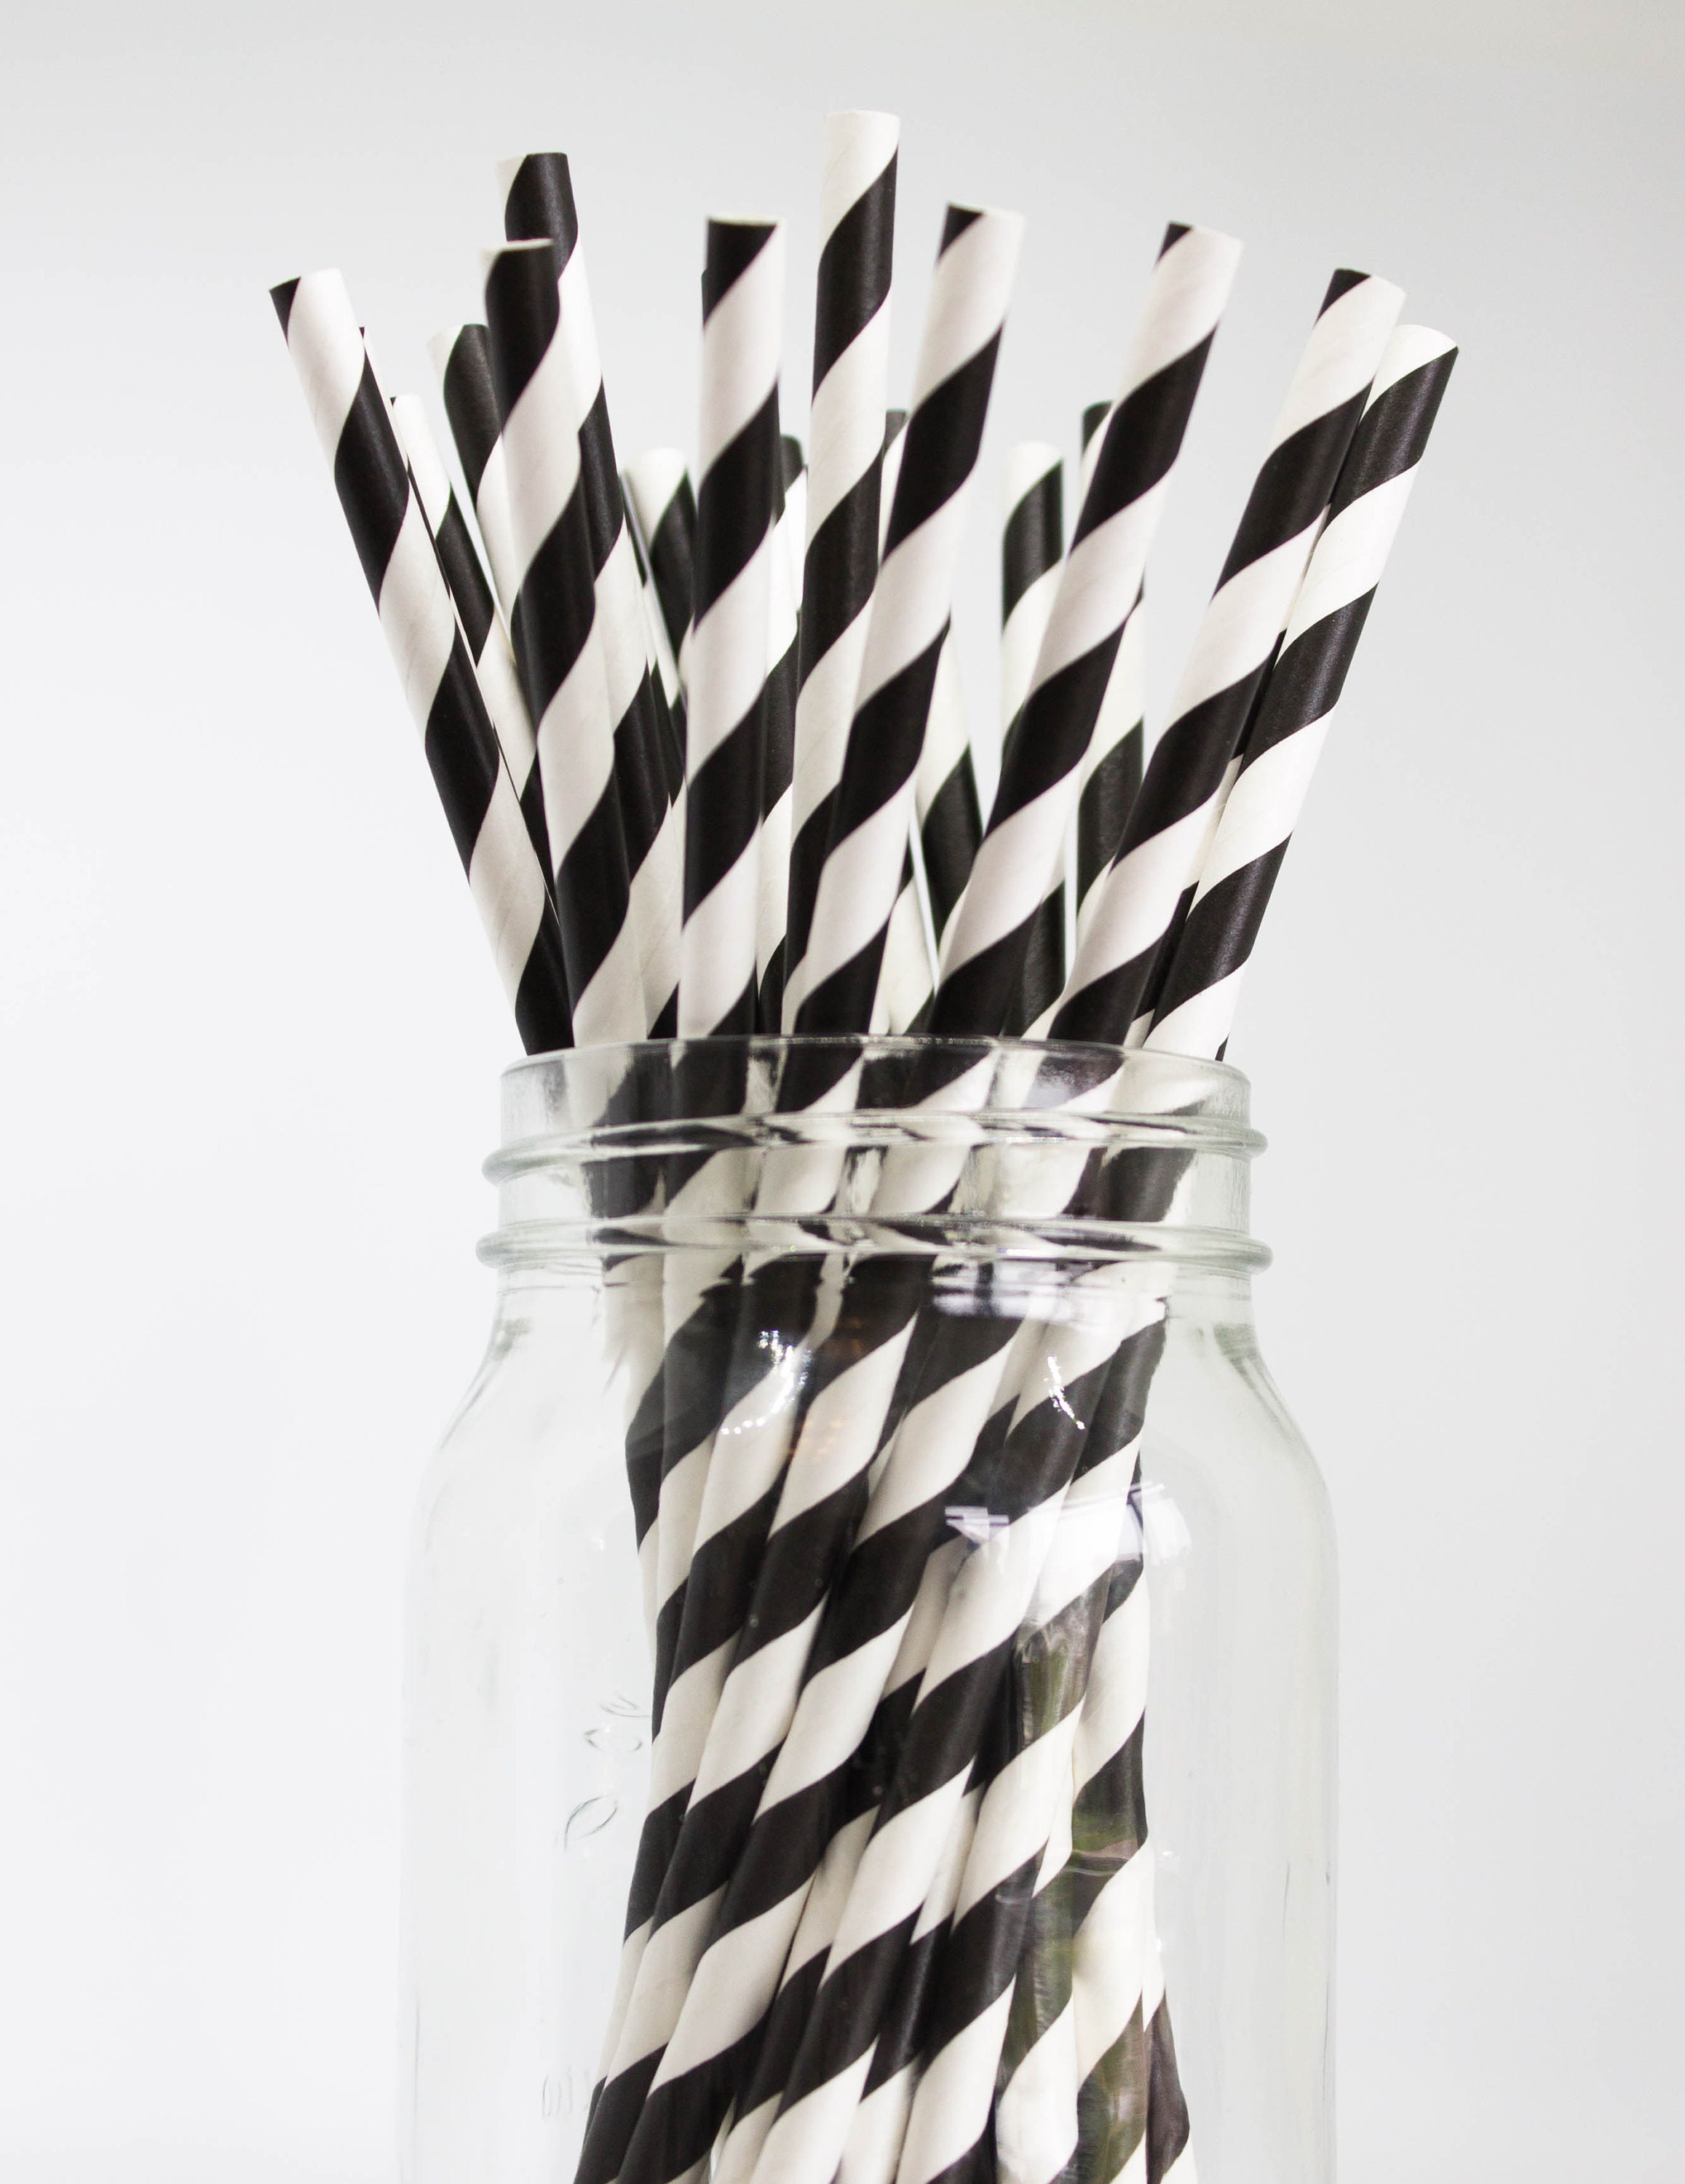 Black & White Candy Cane Striped Cake Pop Party Straws